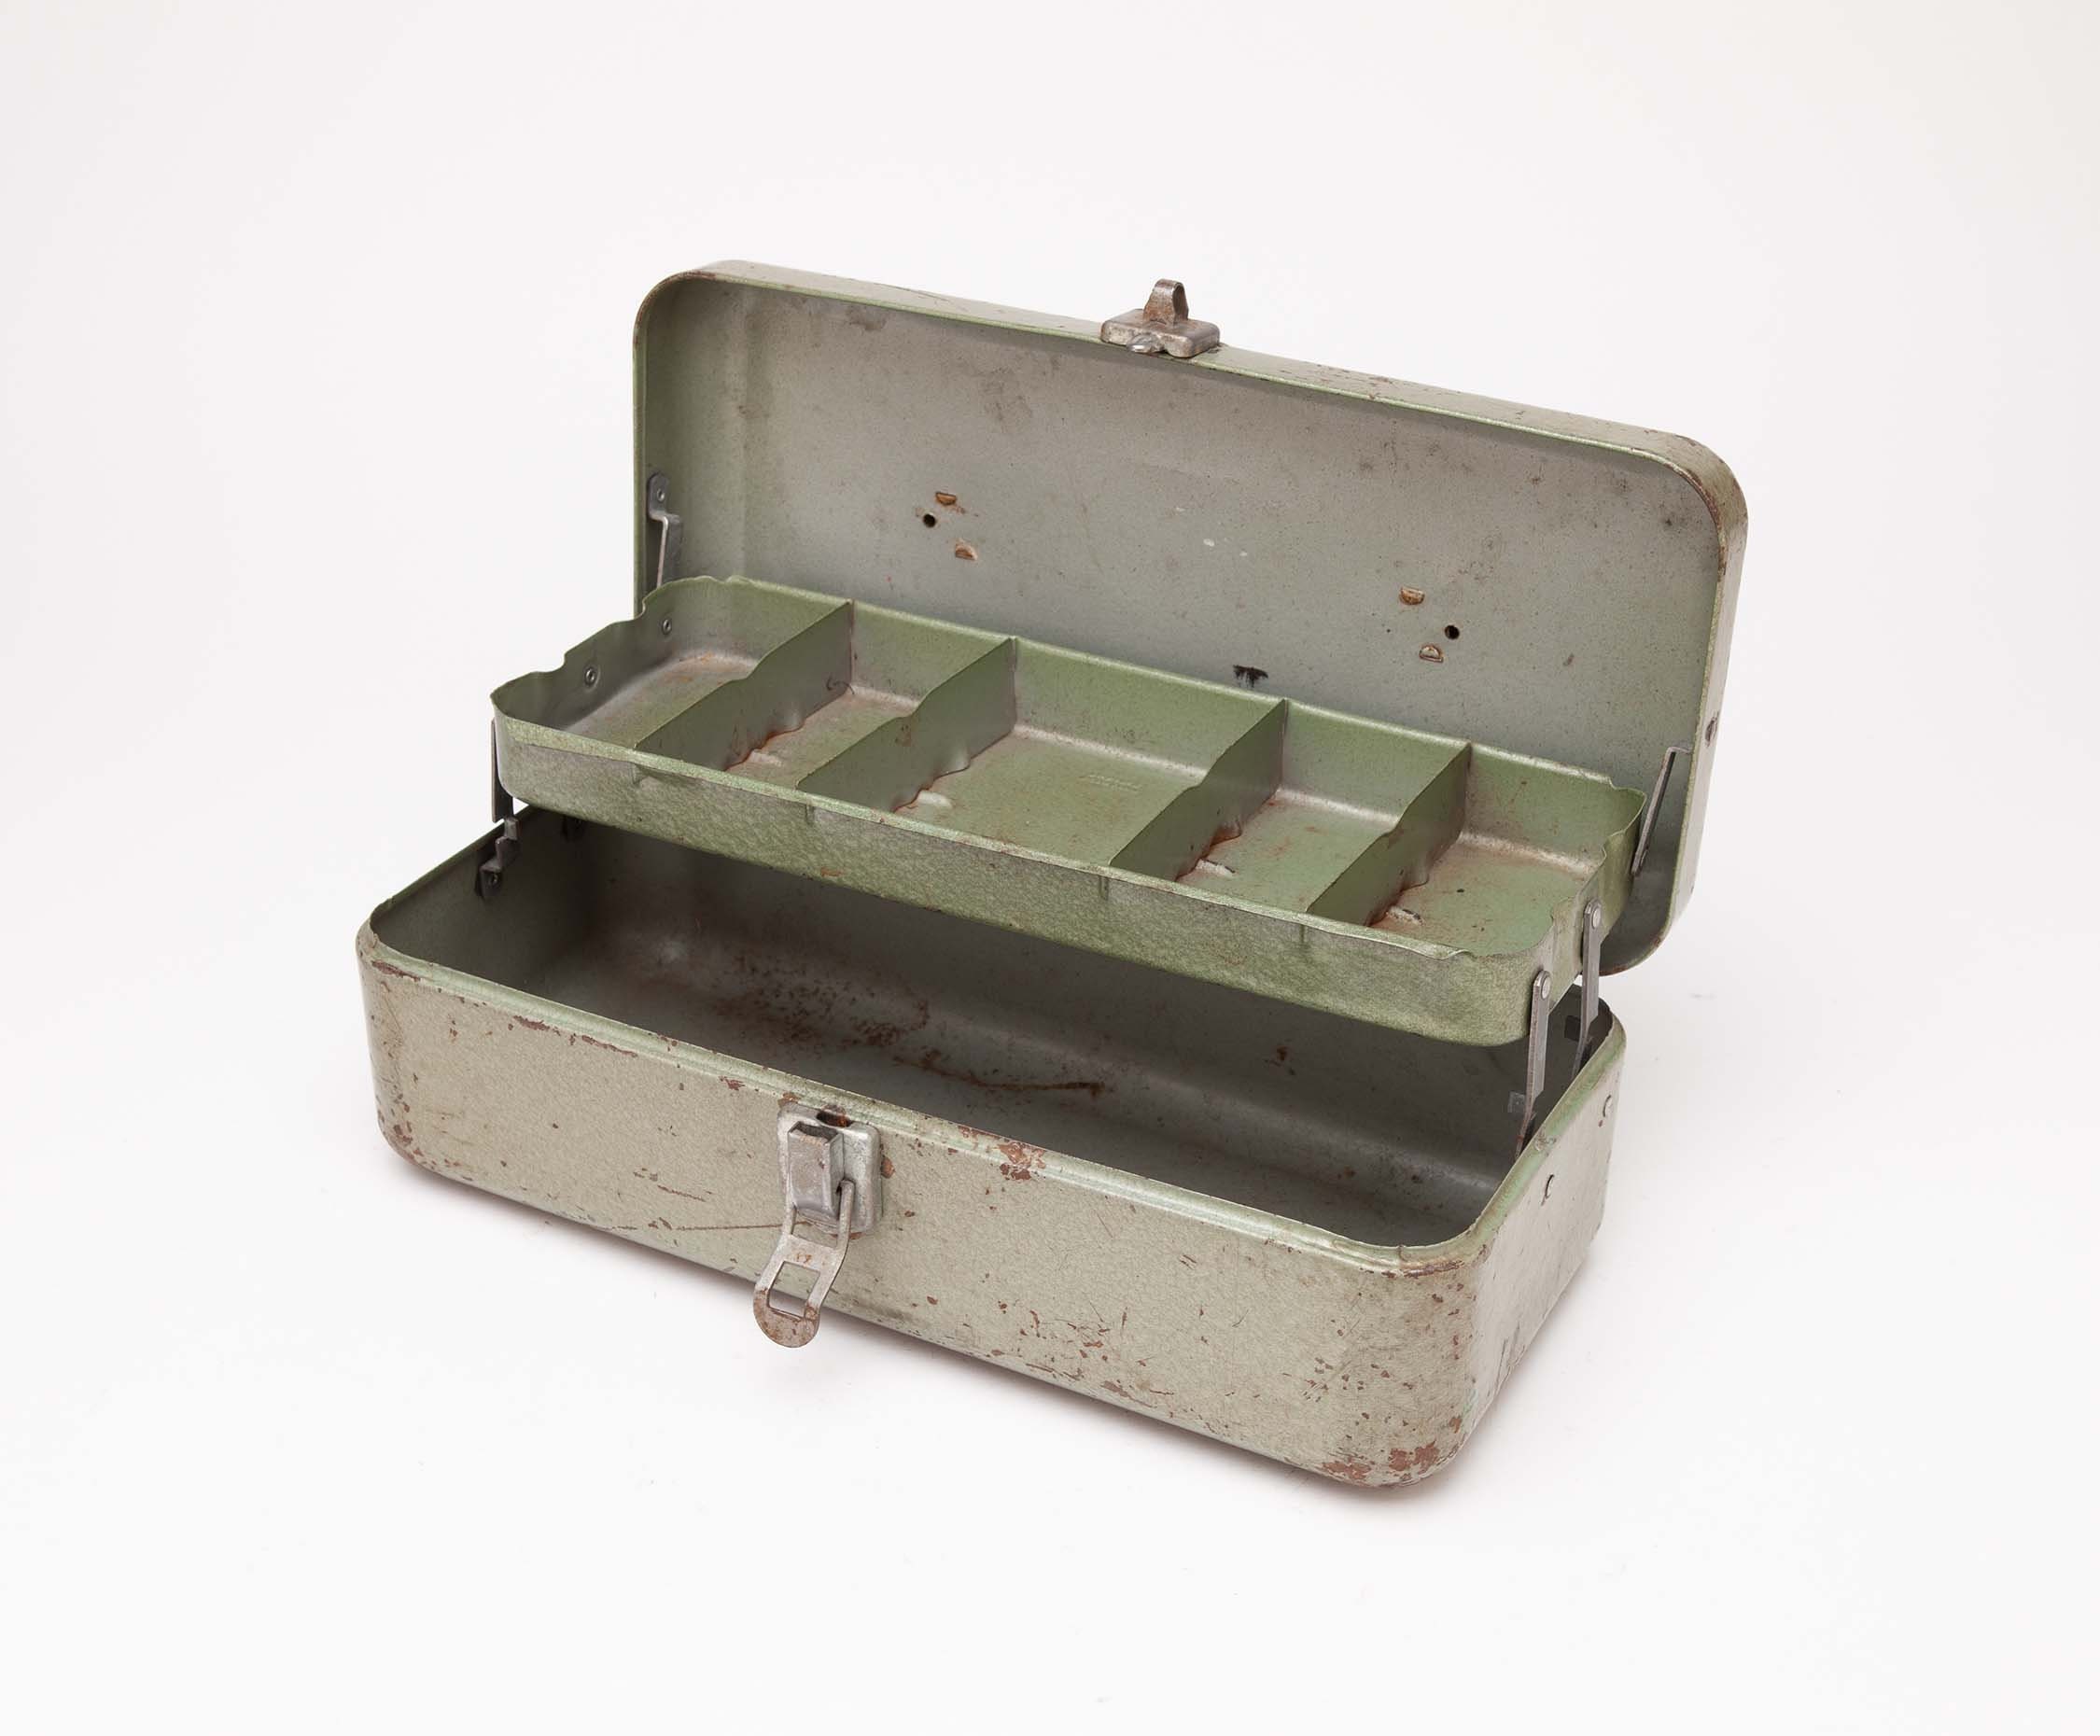 MY BUDDY Vintage Tackle Box - 1 Tray Model - Original Green Painted Finish  - Circa 1960's